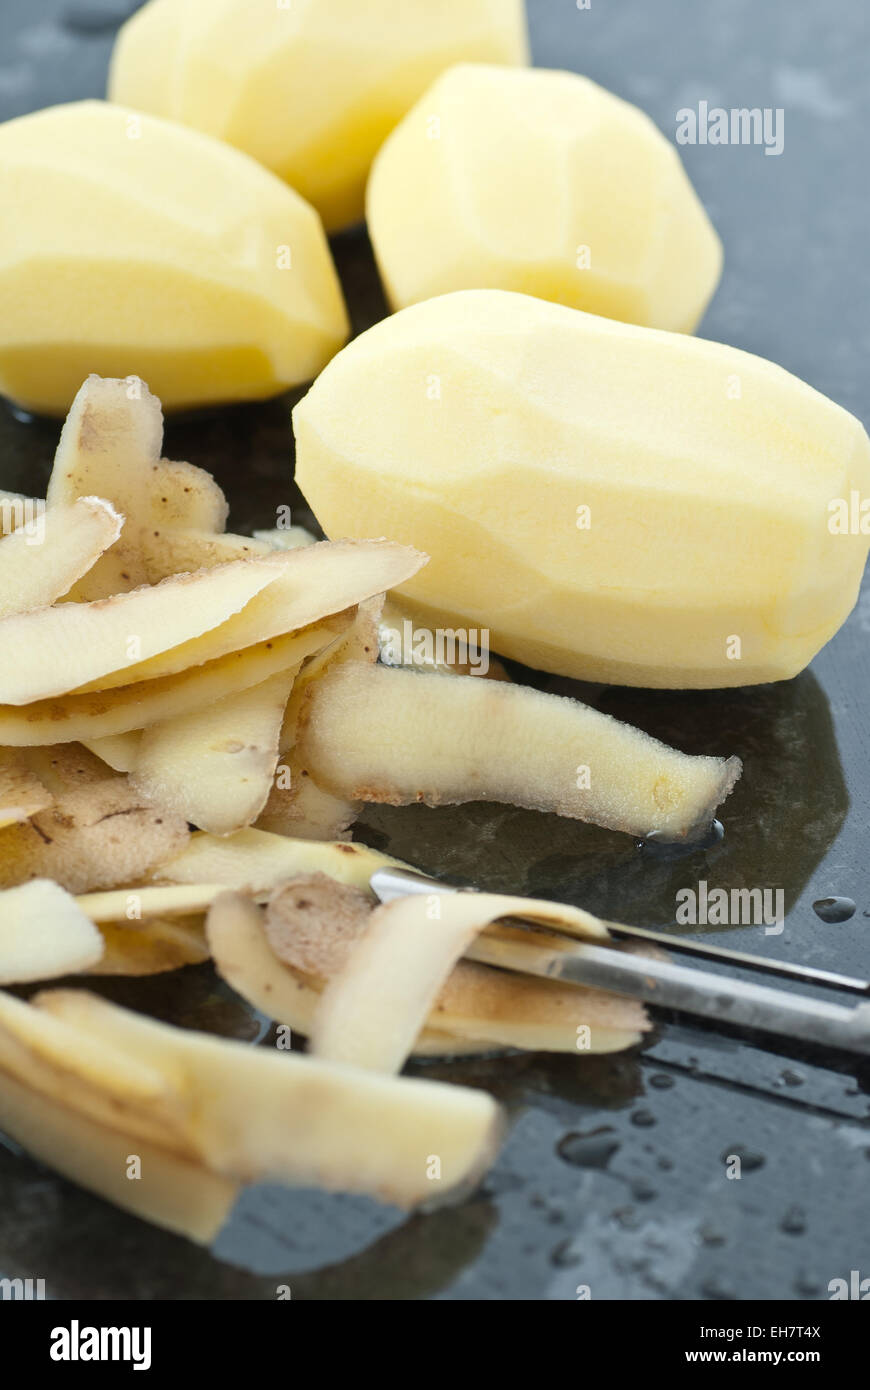 Raw peeled potatoes with peeler. Stock Photo